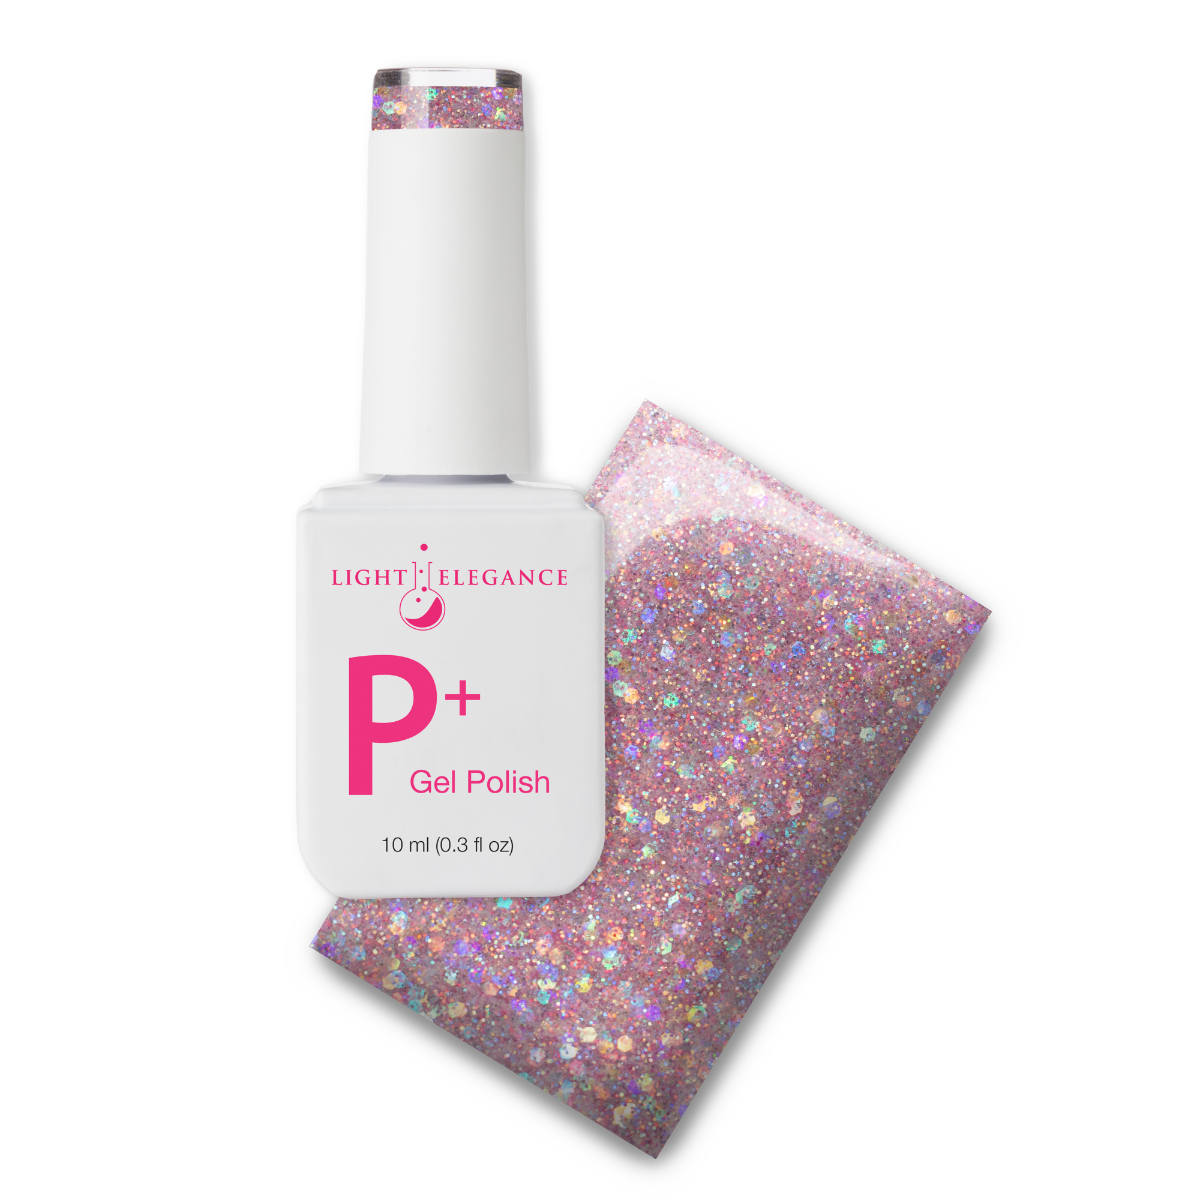 Light Elegance P+ Soak Off Glitter Gel - Free Spirit :: New Packaging